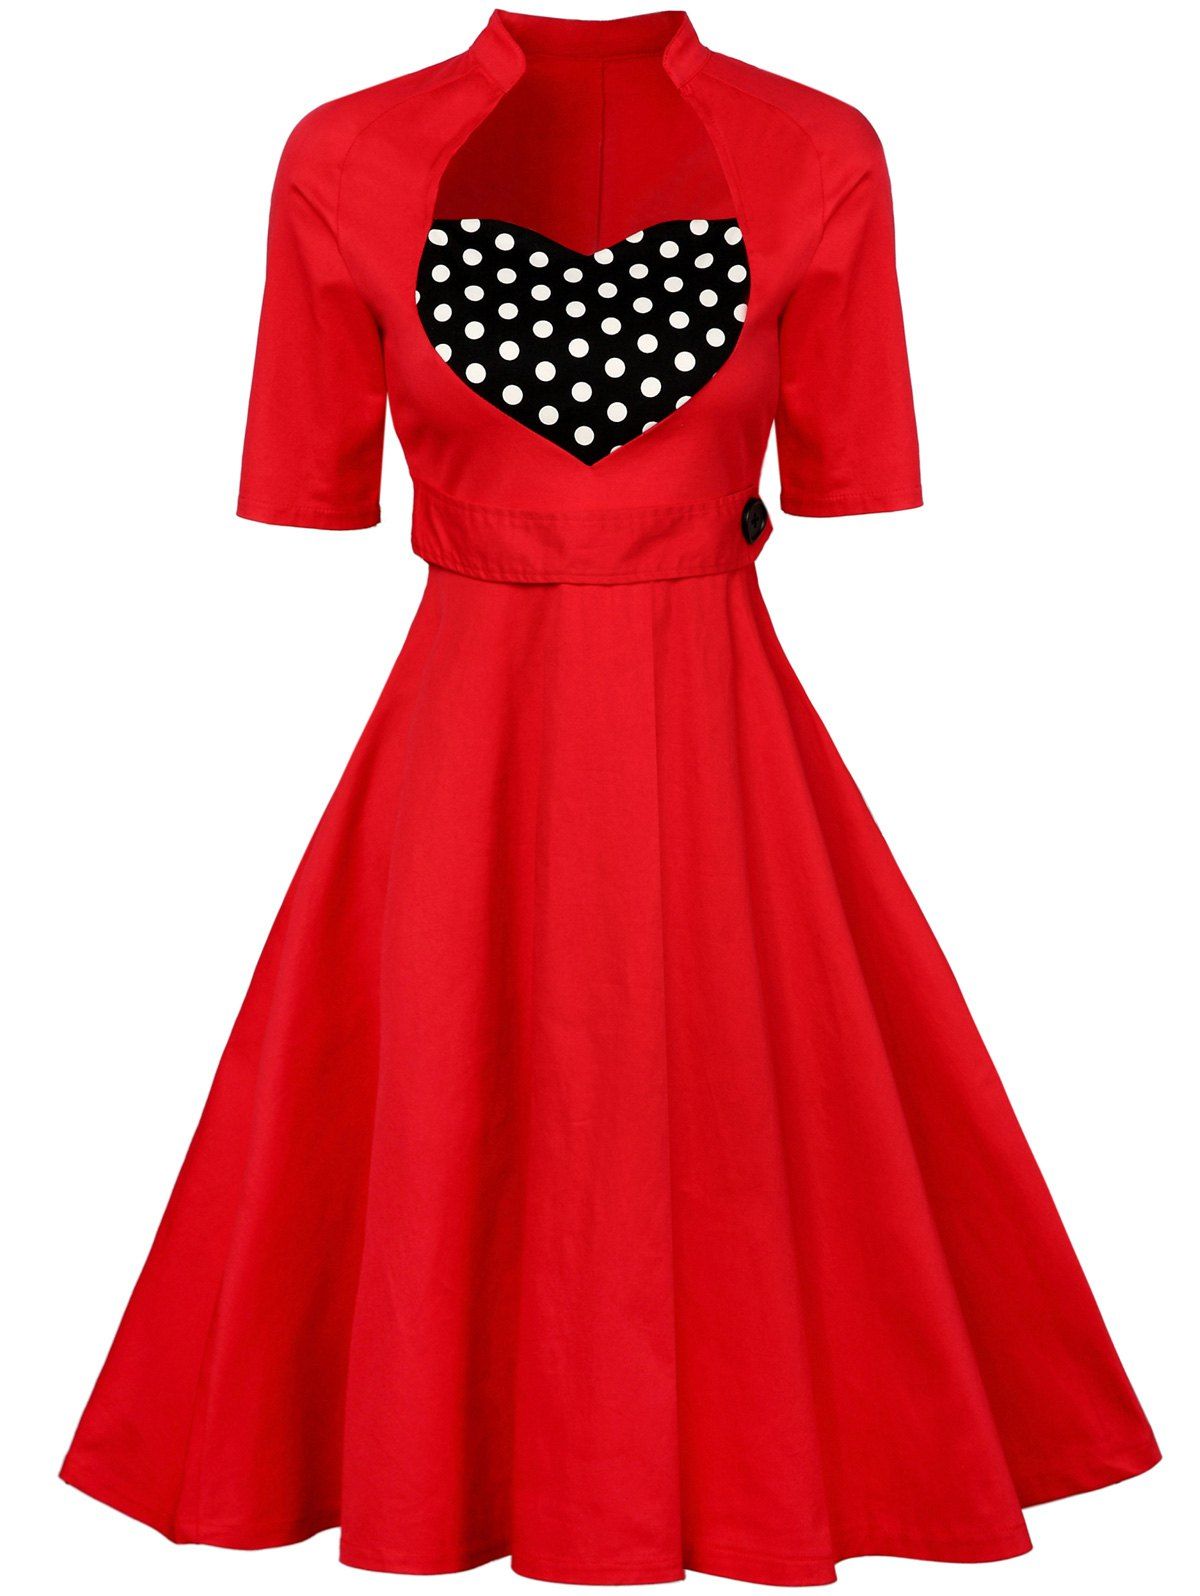 [17% OFF] 2021 Sweetheart Neck Vintage Swing Flare Dress In RED | DressLily